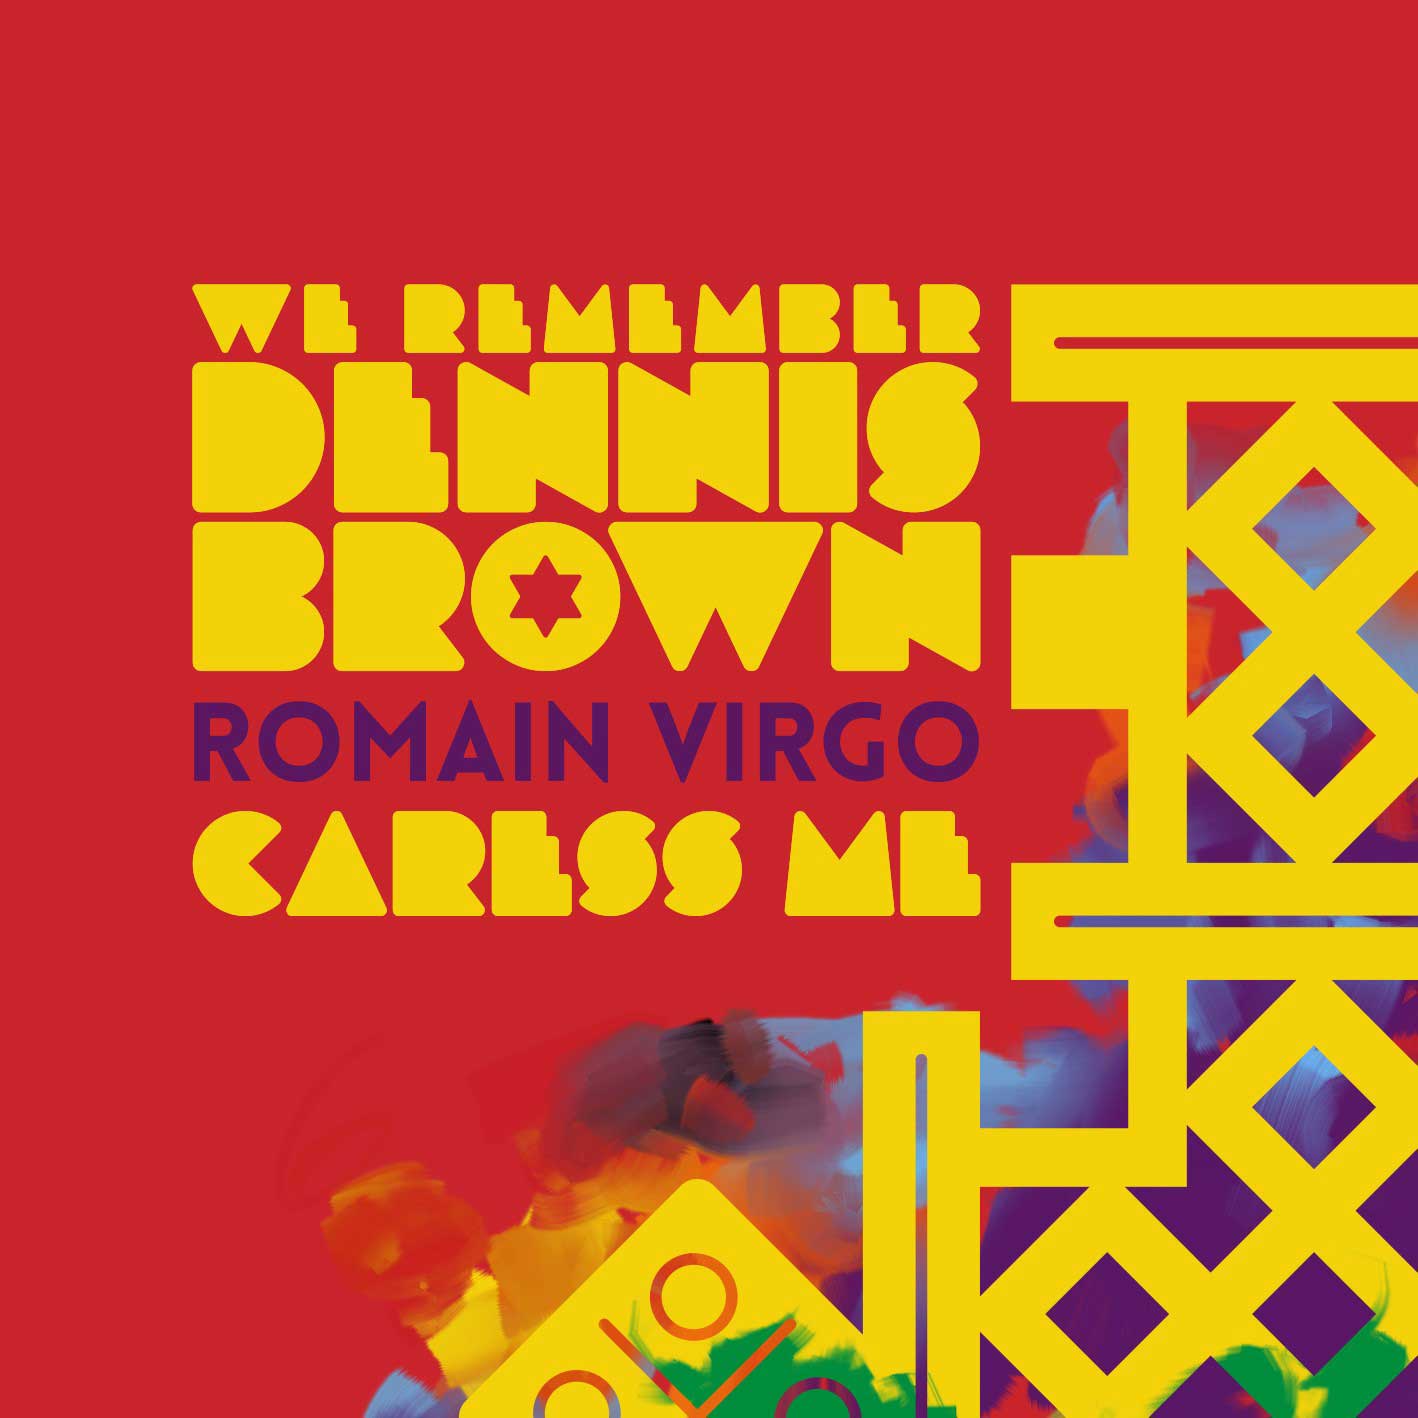 Dennis_Brown-Romain_Virgo-Caress_Me-Cover